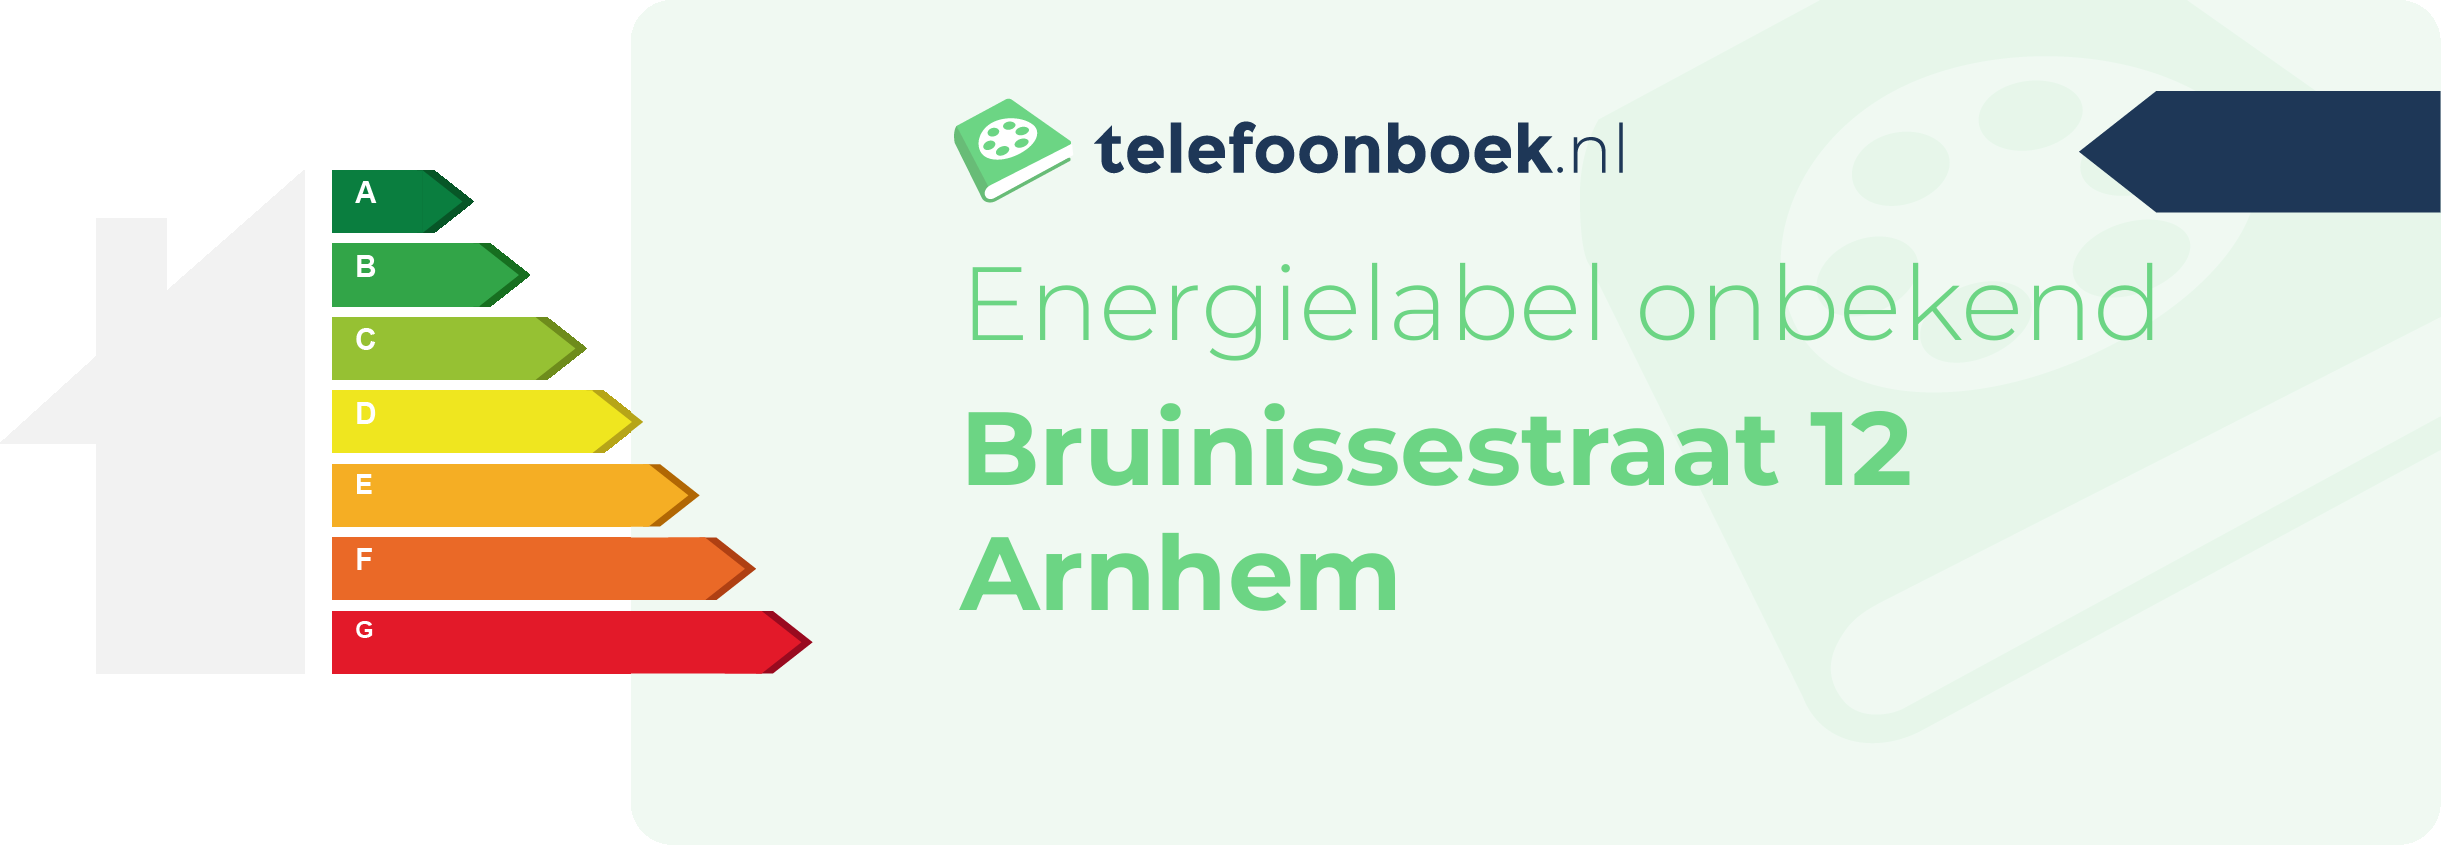 Energielabel Bruinissestraat 12 Arnhem